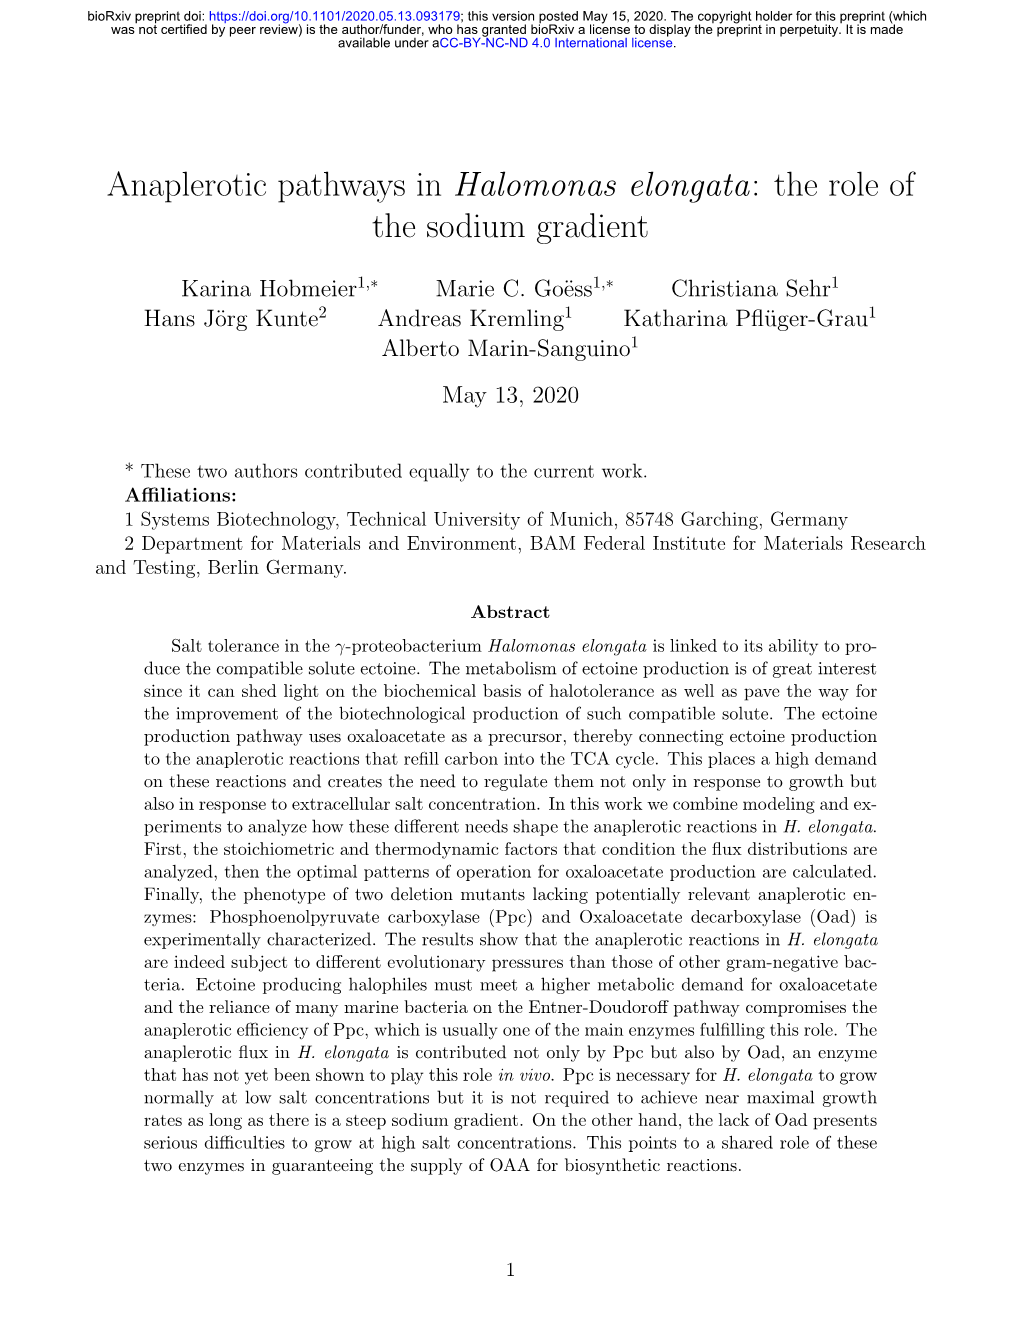 Anaplerotic Pathways in Halomonas Elongata: the Role of the Sodium Gradient